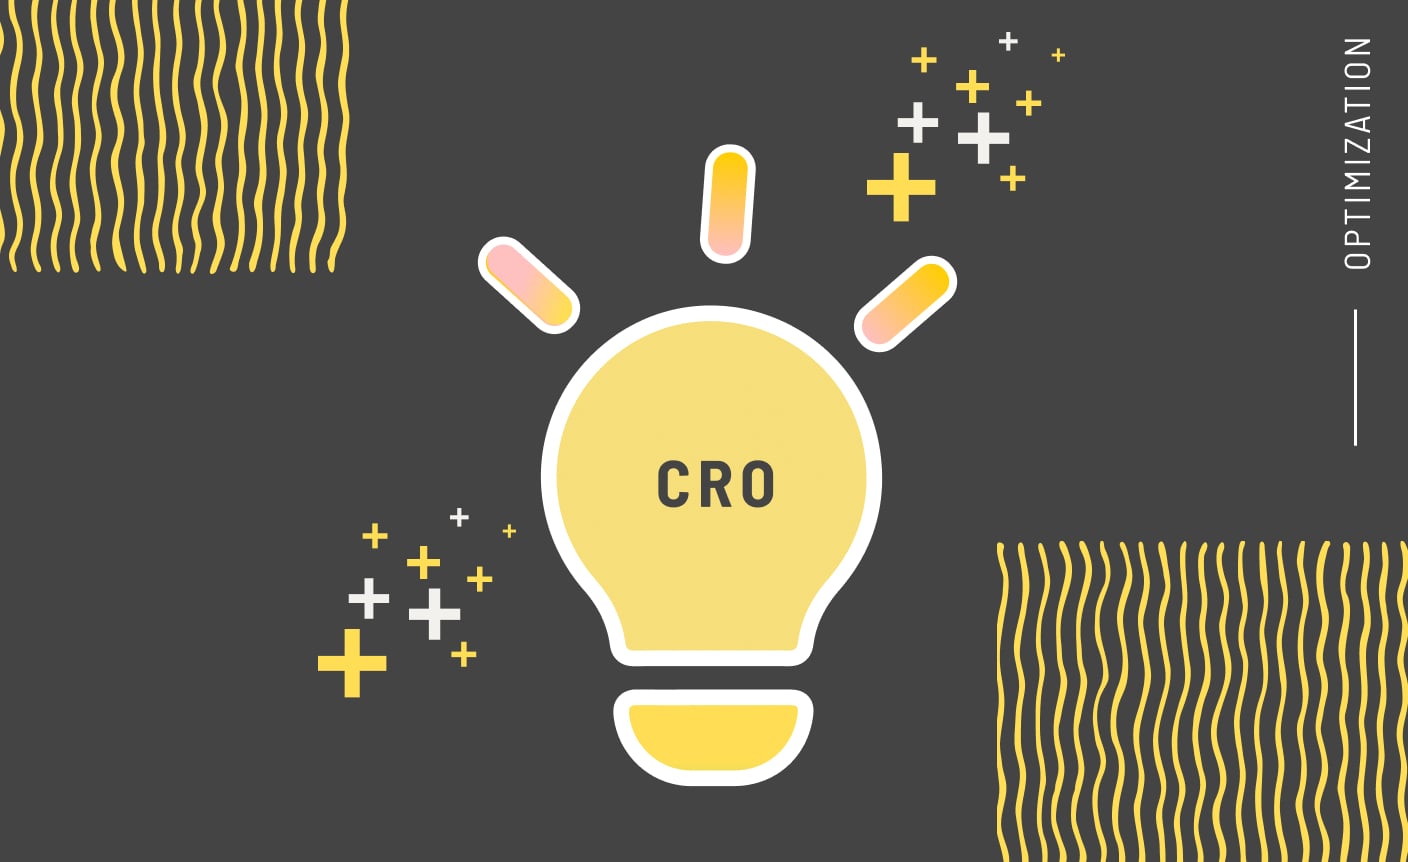 12 CRO metrics to track conversion rate optimization performance